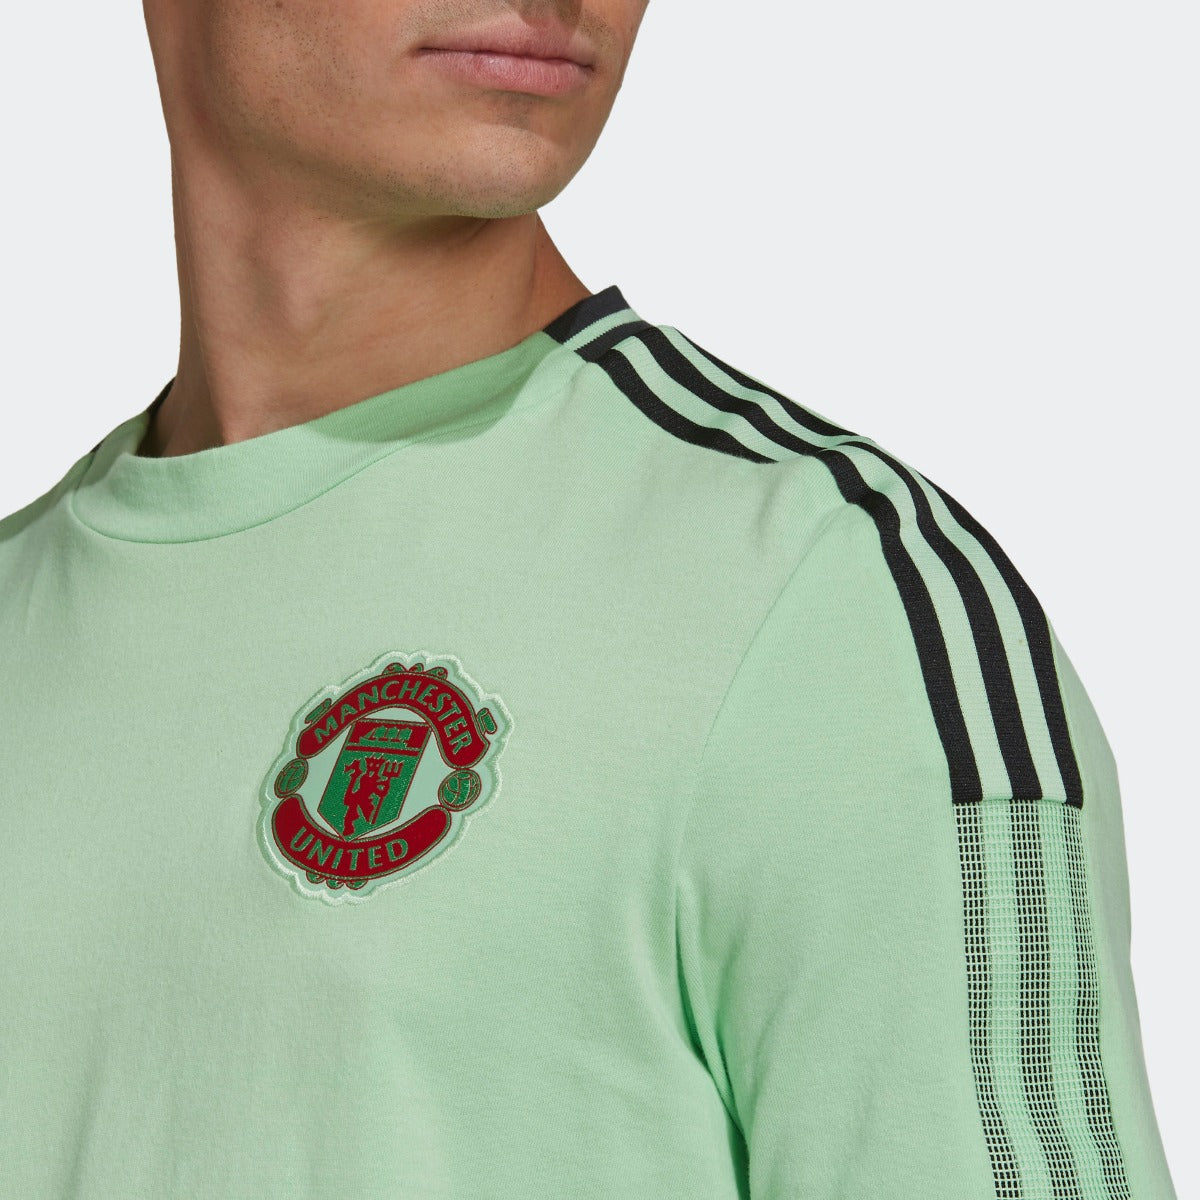 Adidas 2021 Manchester United Tee Shirt - Glory Mint (Detail 1)